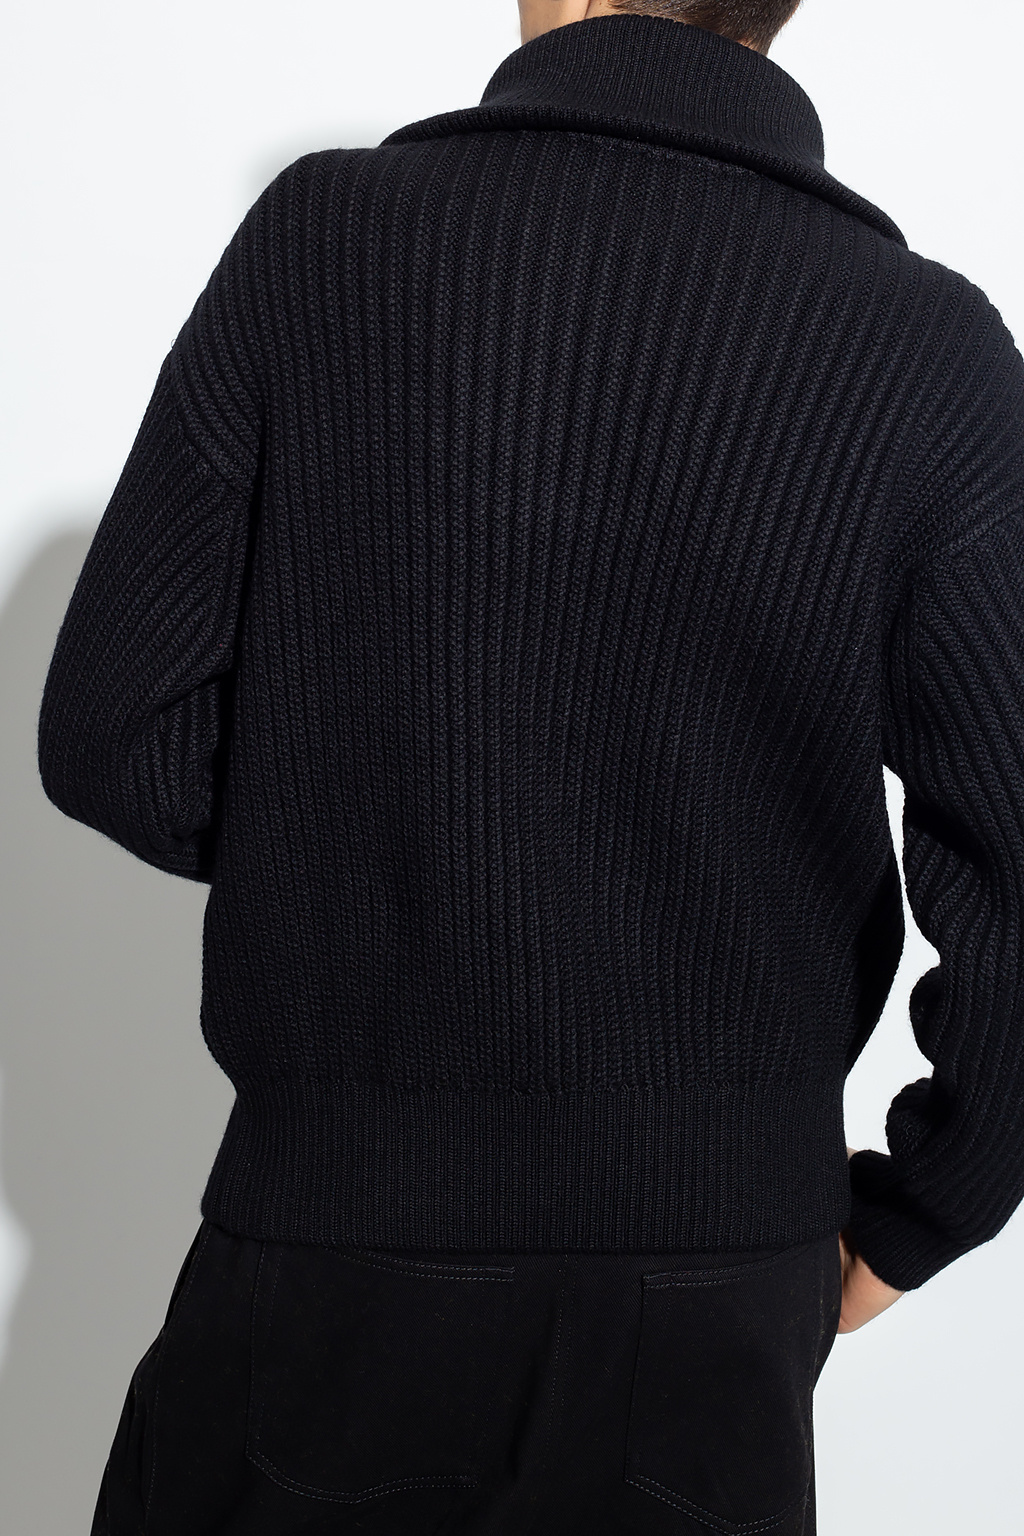 Ami Alexandre Mattiussi Nike Sportswear 1 4-Zip Fleece Sweatshirt